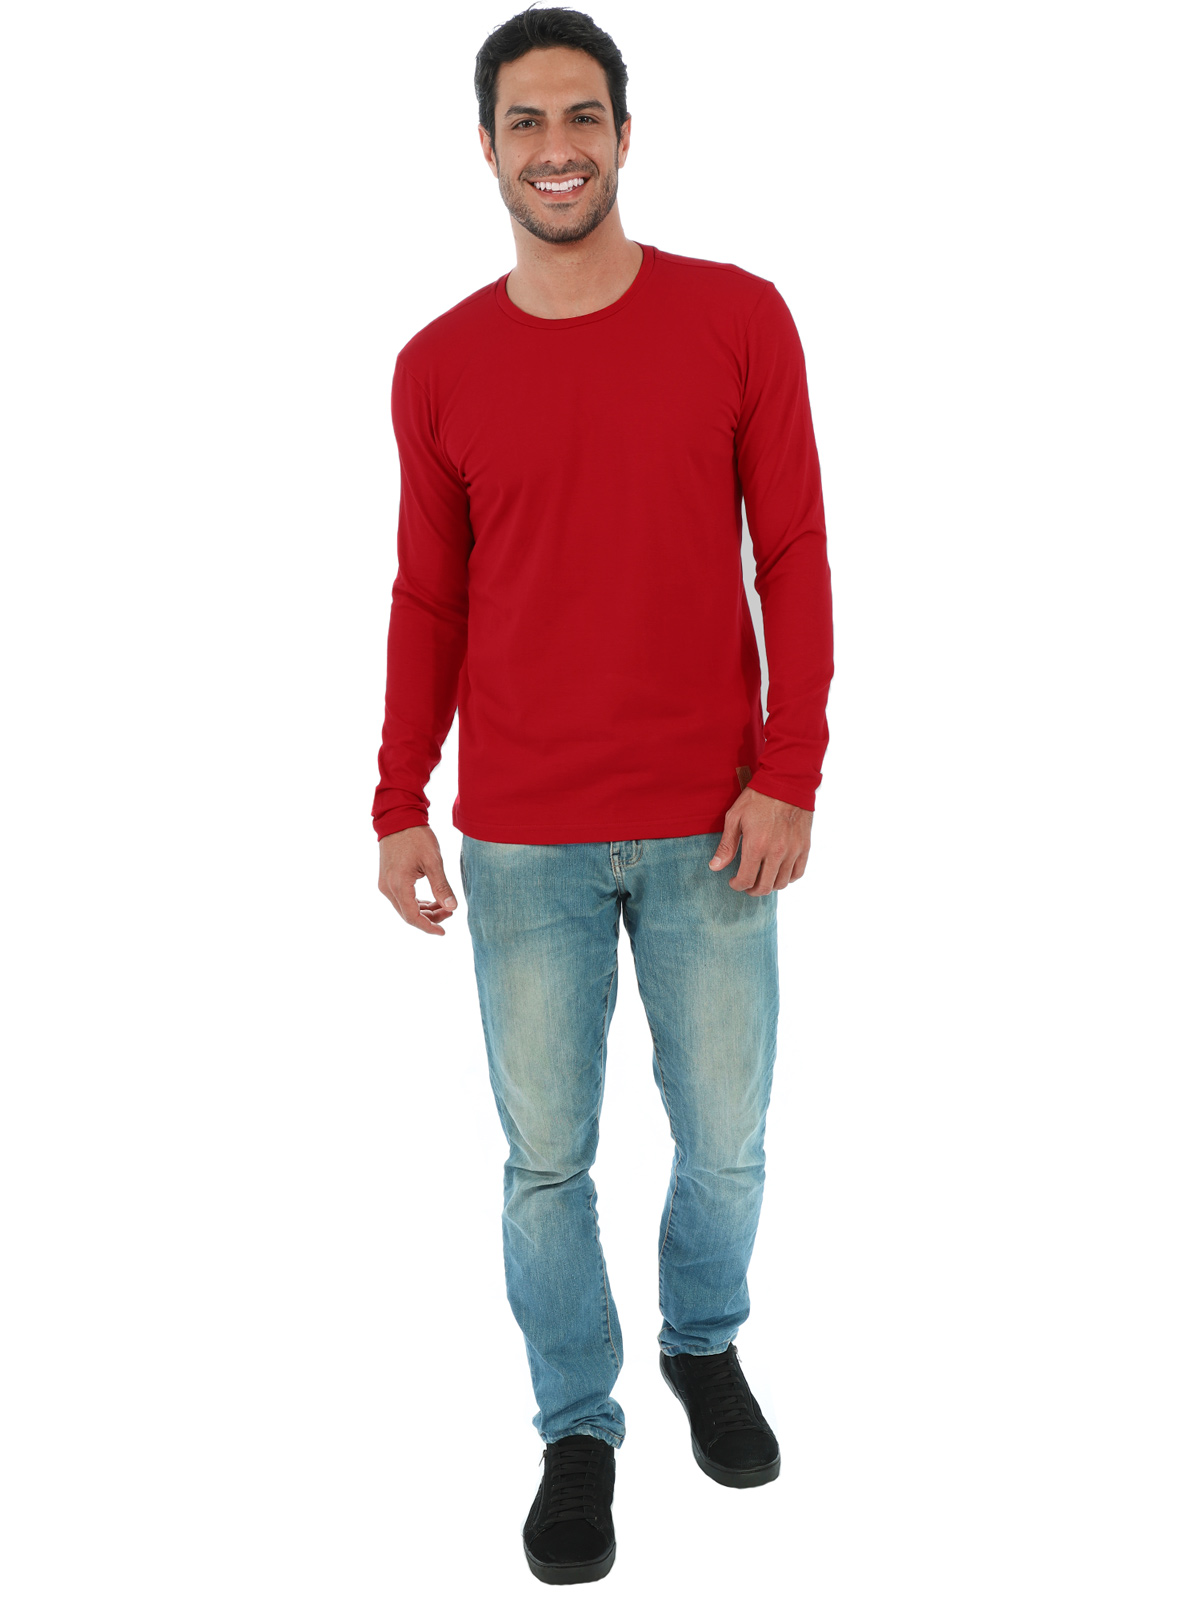 Camiseta Masculina Slim Com Elastano Manga Longa Vermelho